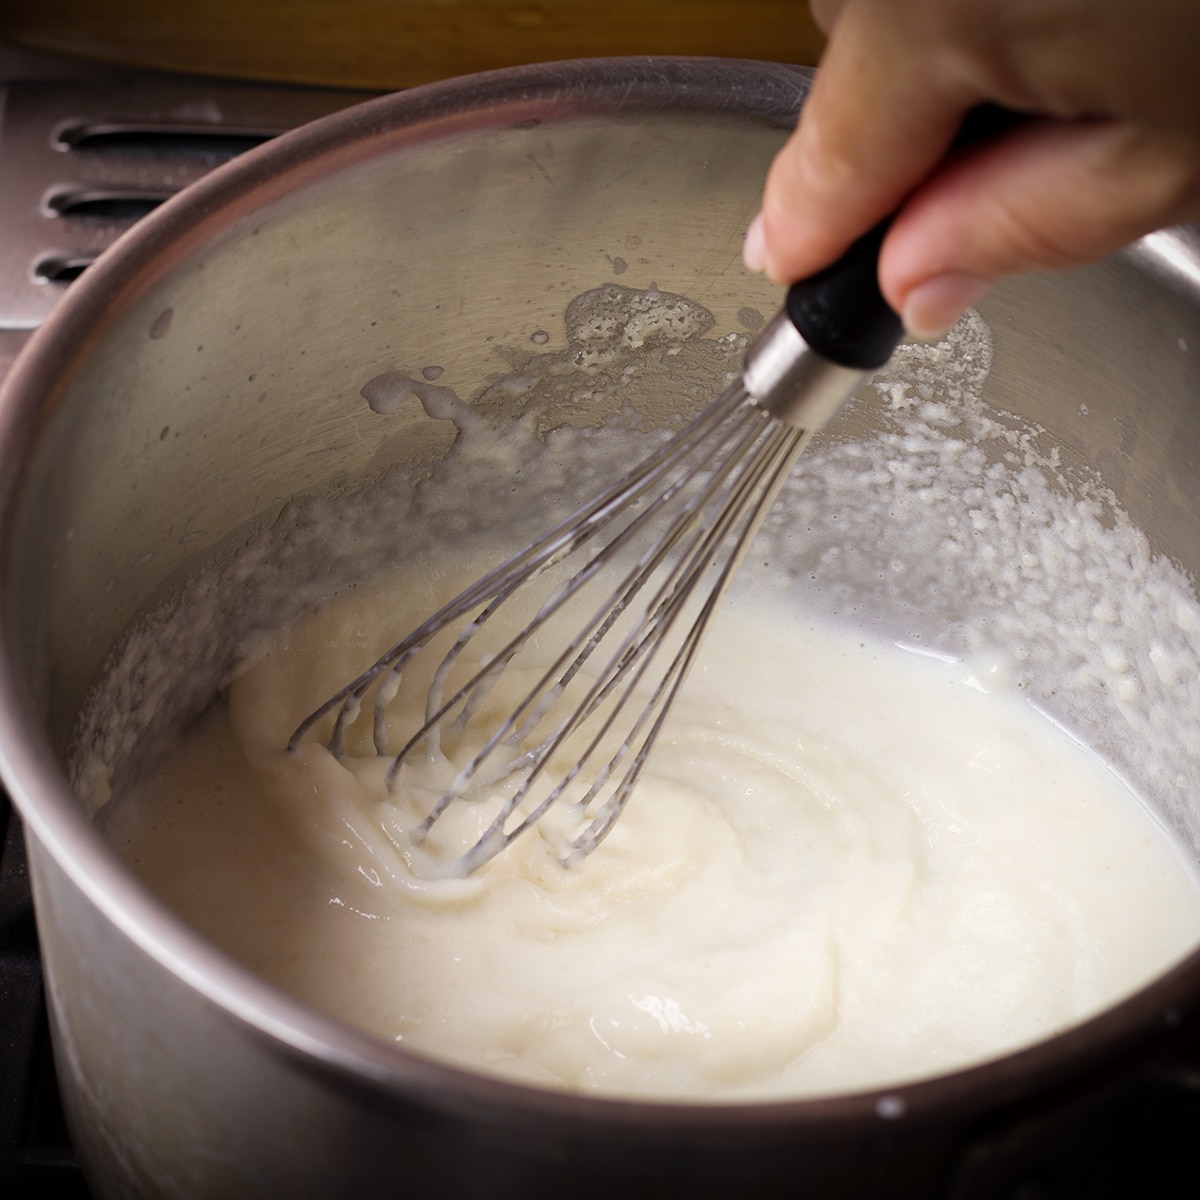 Slowly adding milk to roux in a saucepan to make Béchamel sauce.